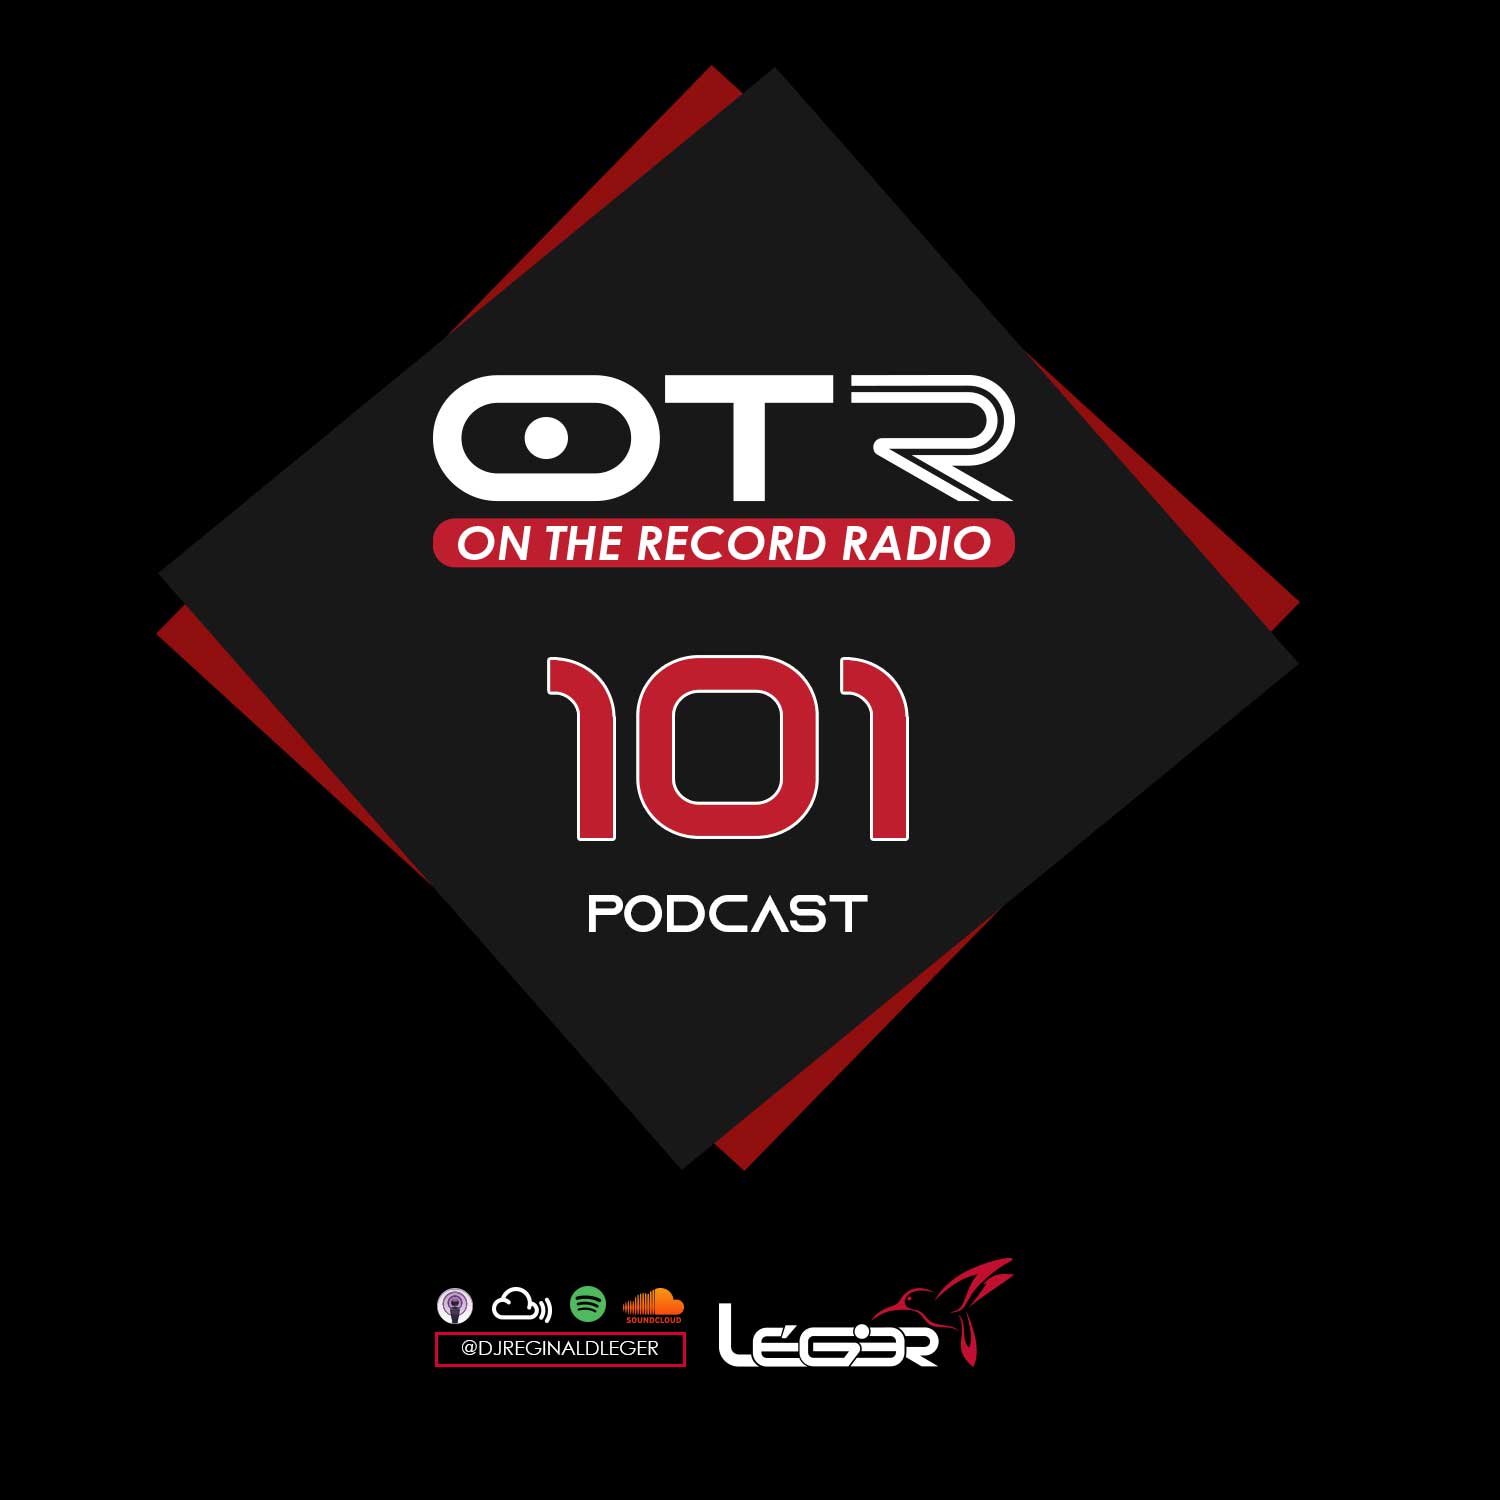 On The Record | OTR 101